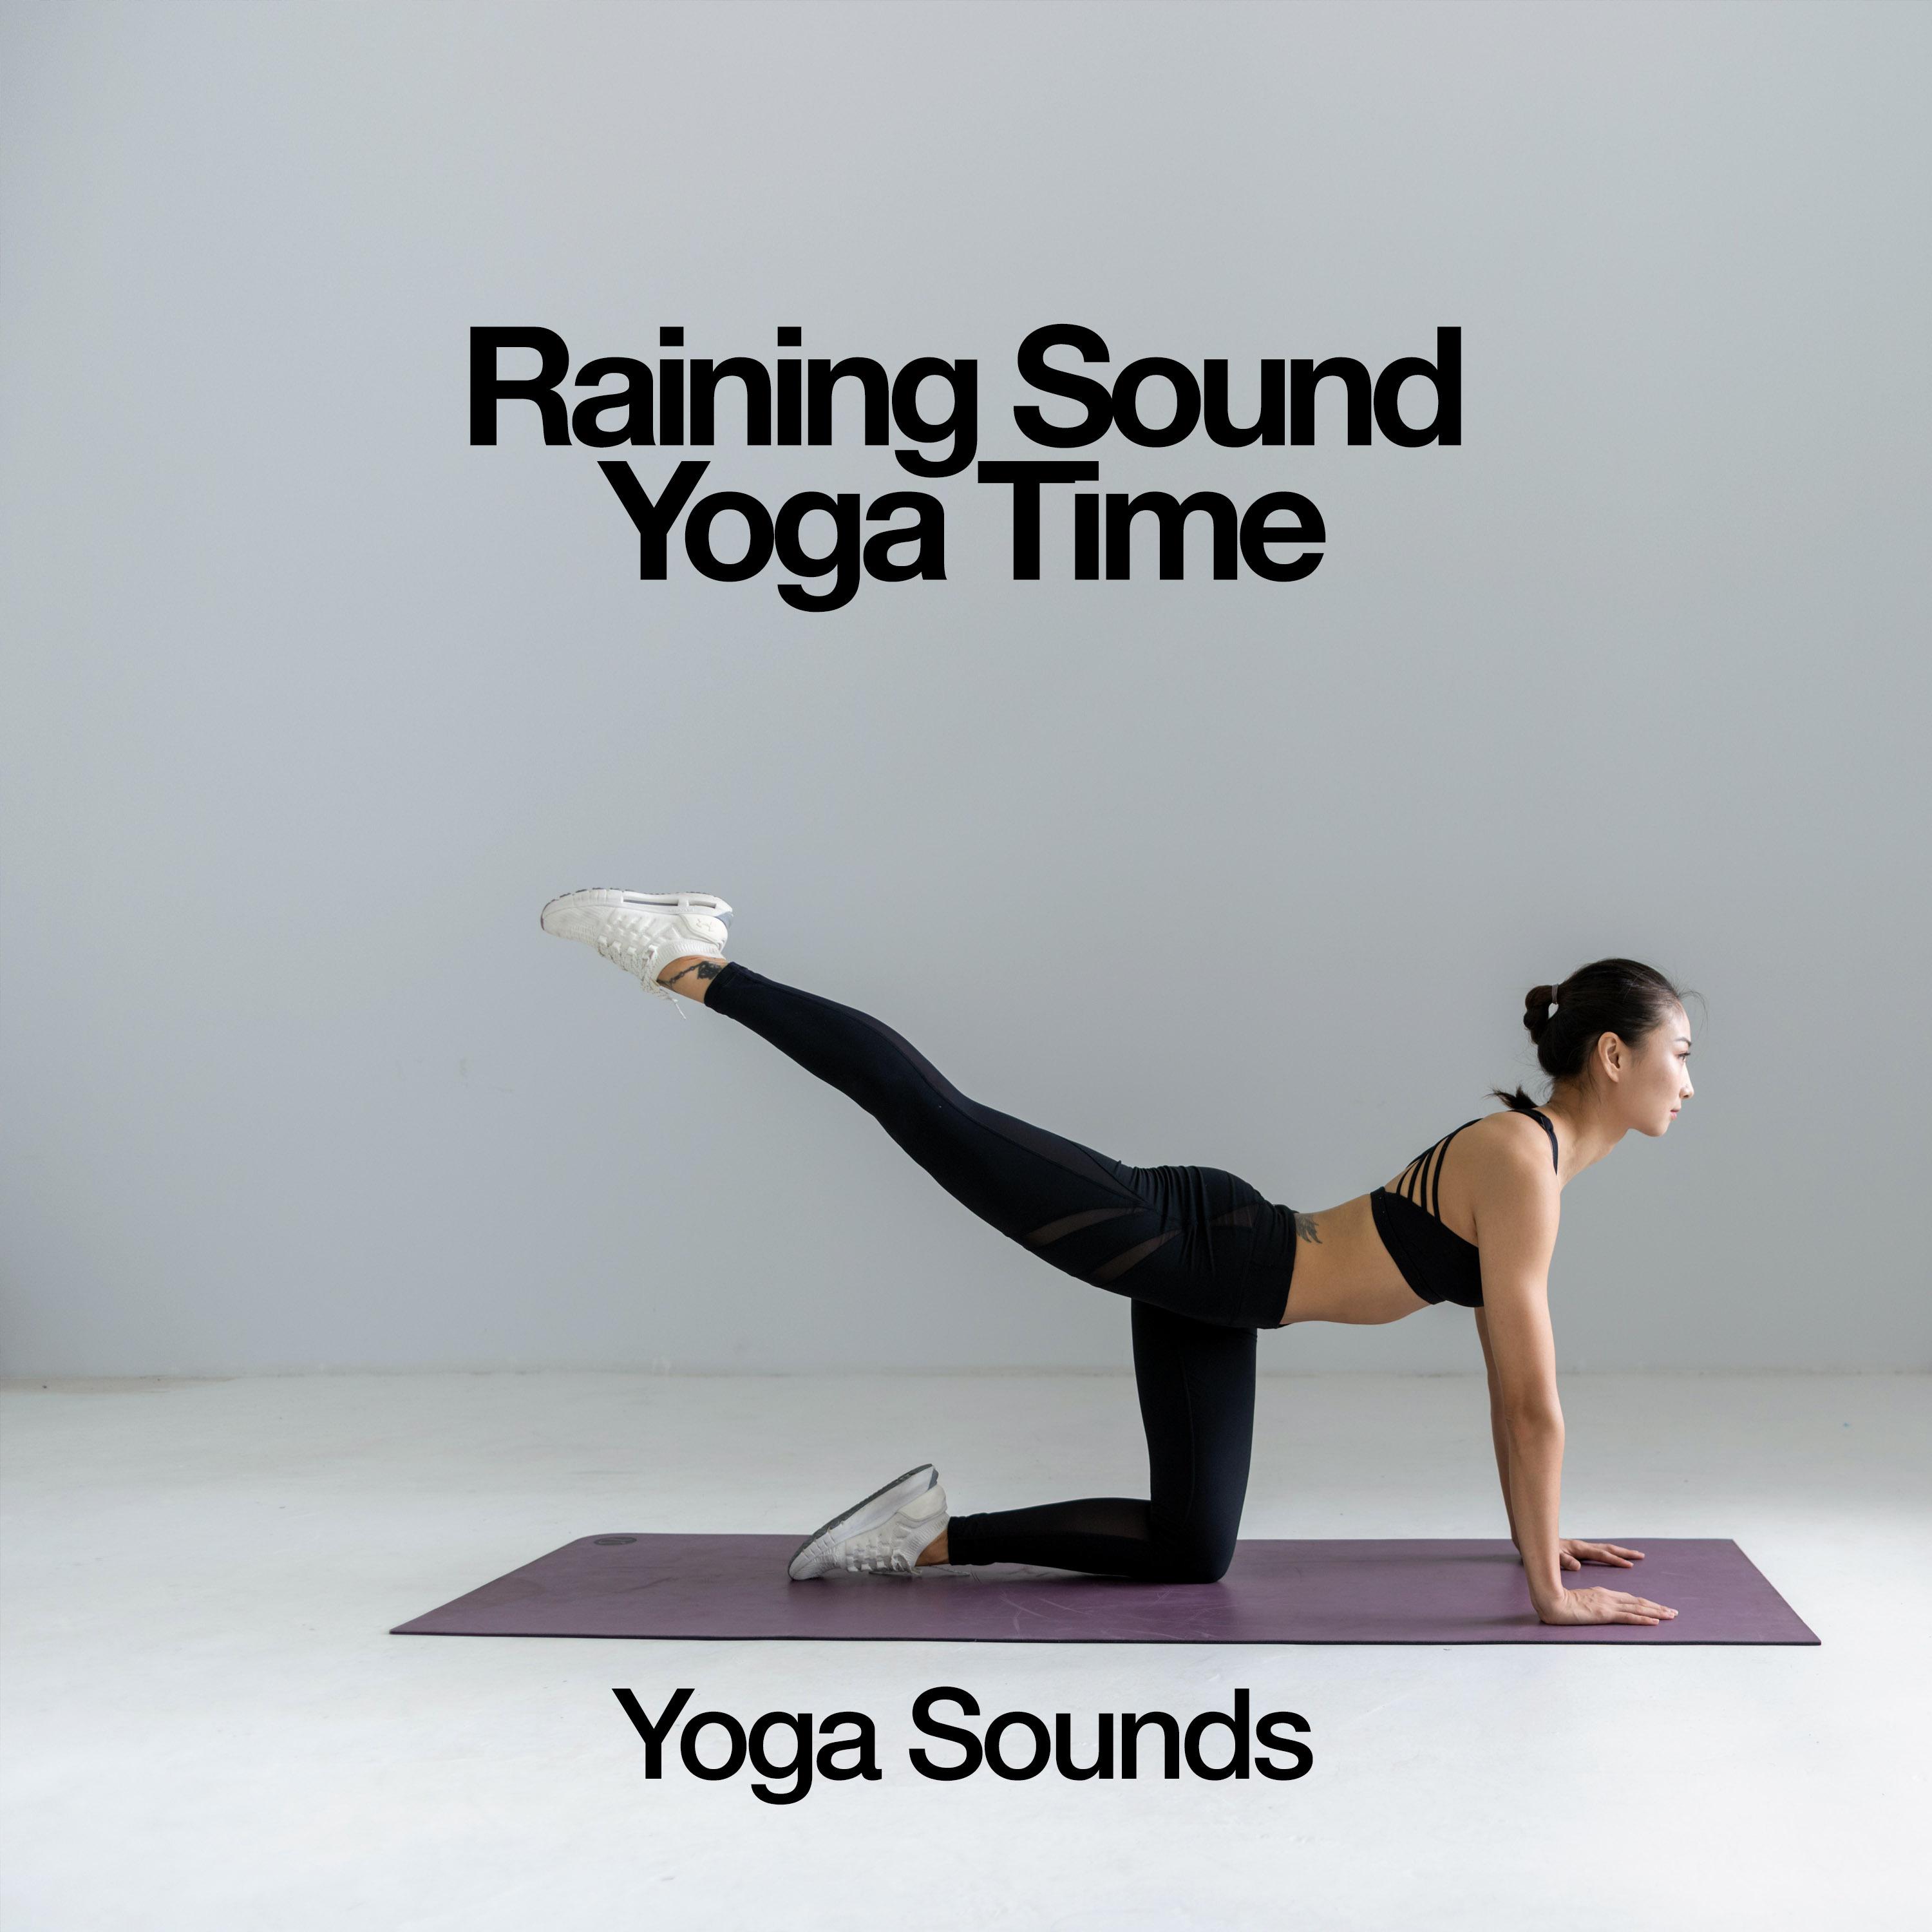 Raining Sound: Yoga Time